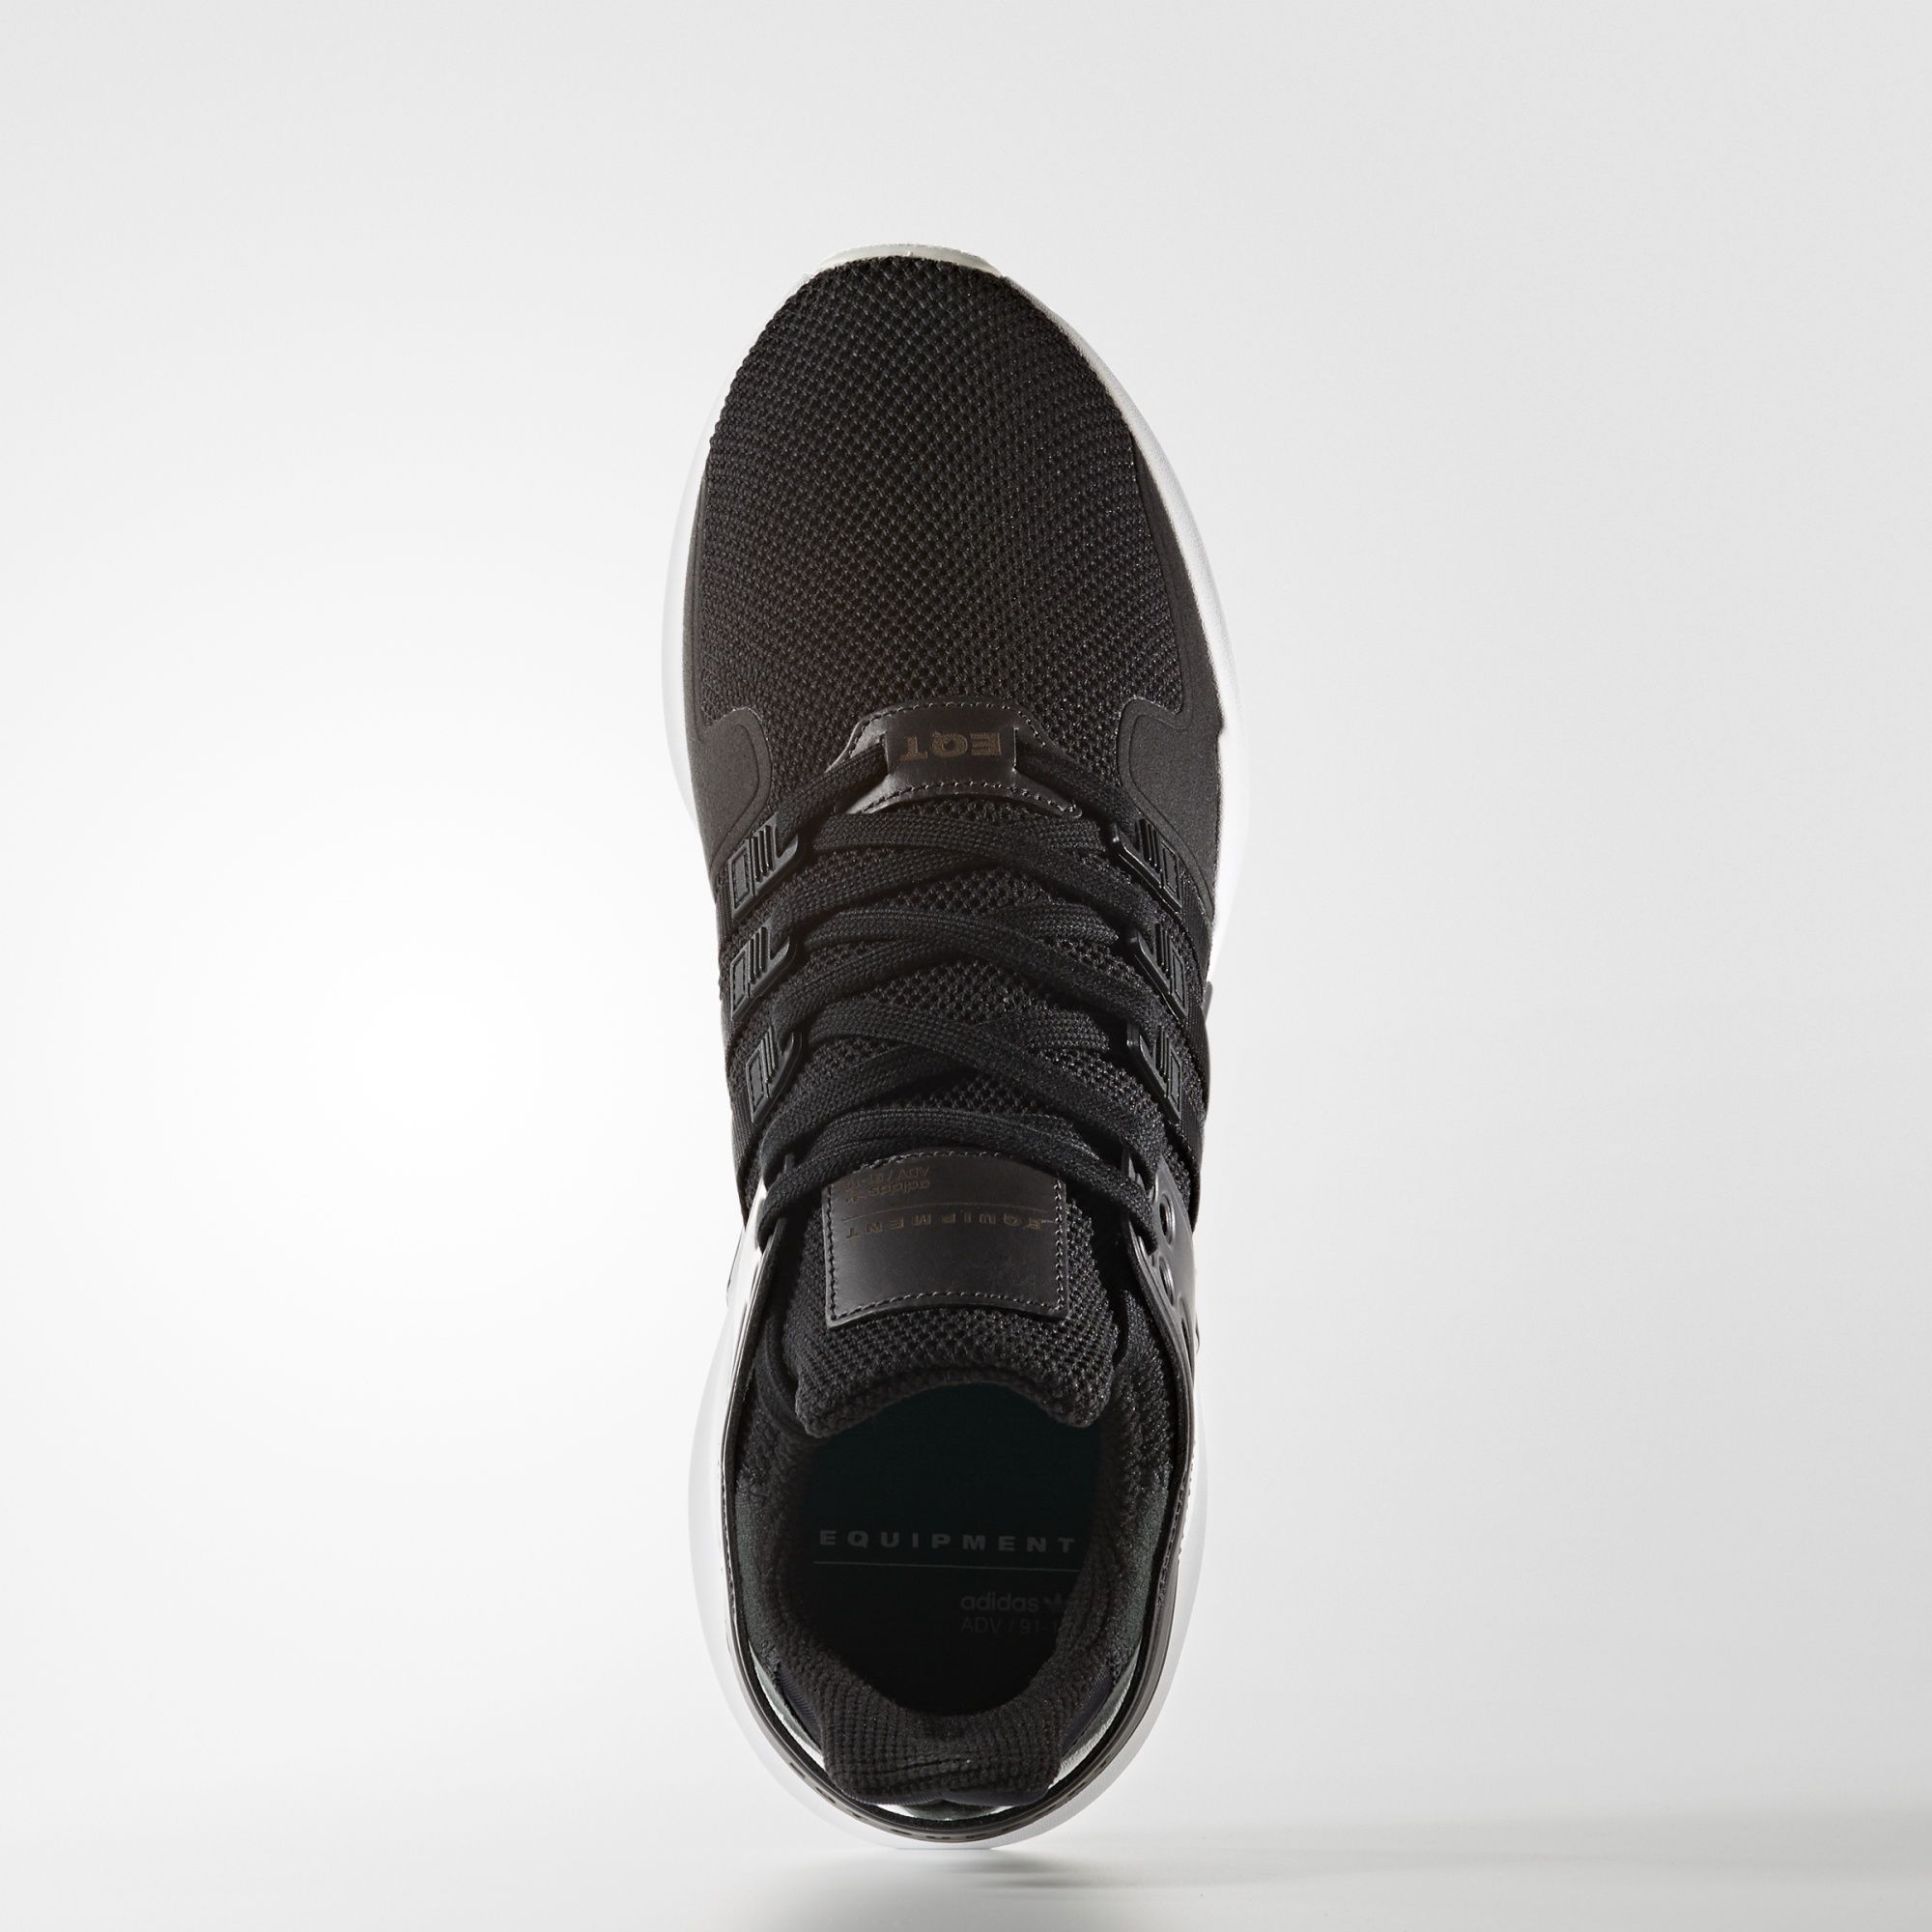 Adidas EQT Support ADV
Core Black / Footwear White